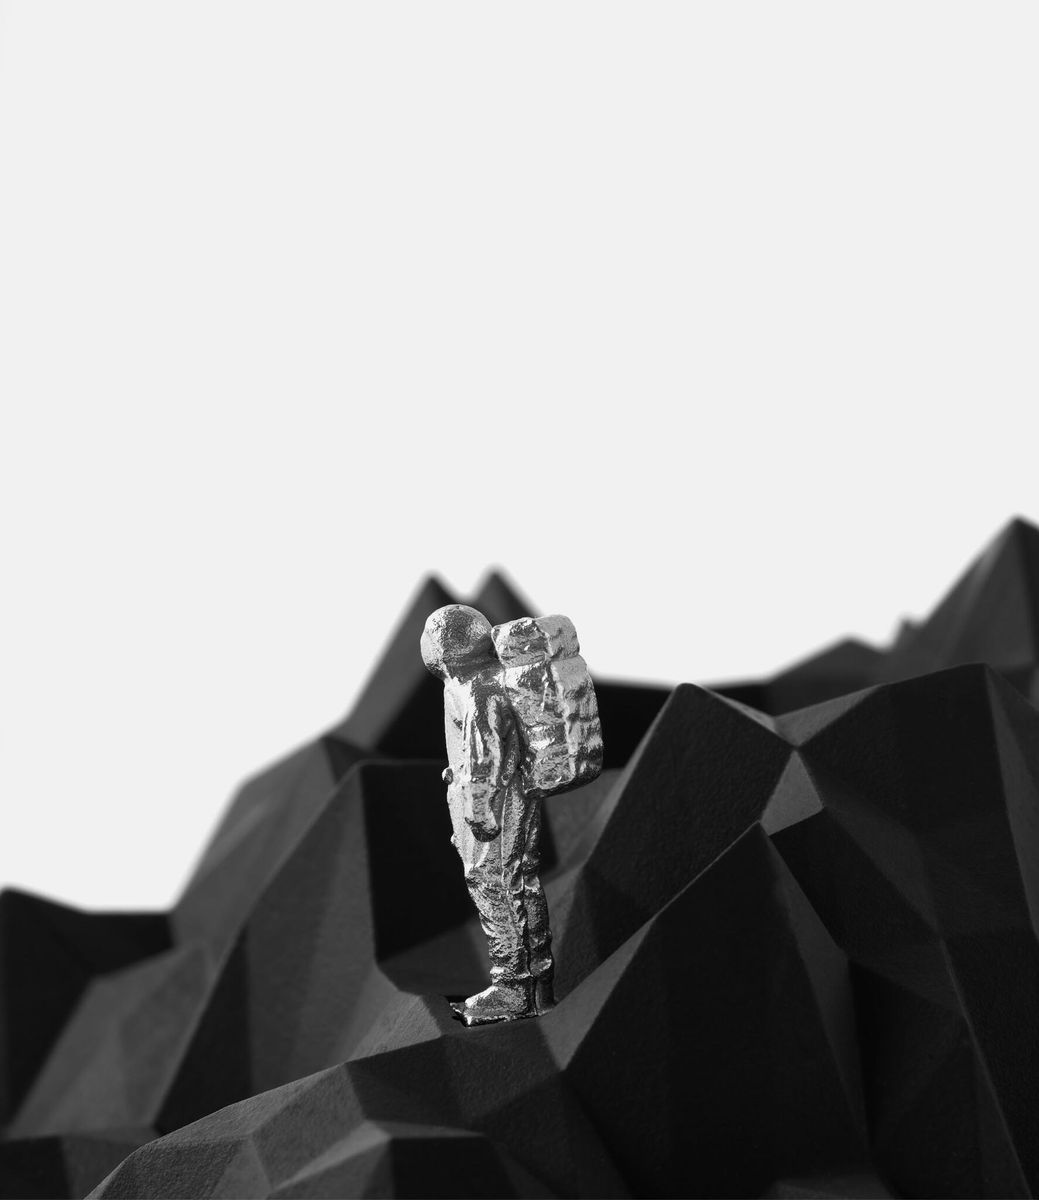 Dilio Little Lonely Mt. Obsidian Black — диффузор из бетона